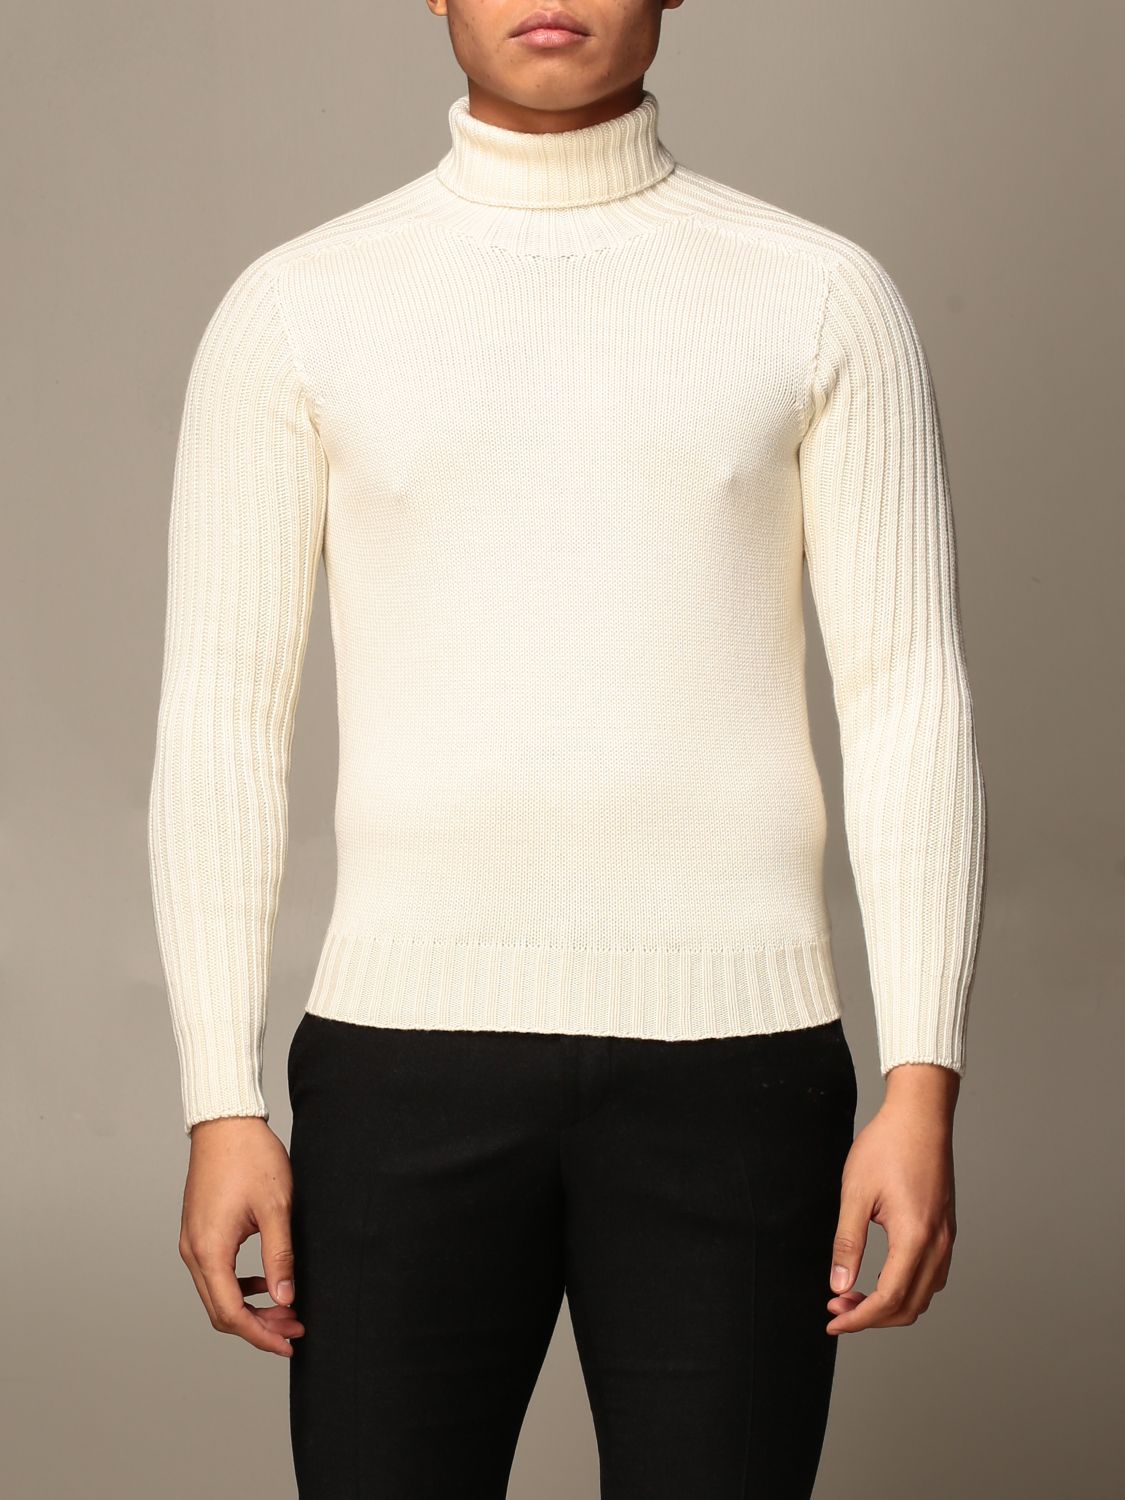 Gran Sasso Outlet: classic wool turtleneck | Sweater Gran Sasso Men ...